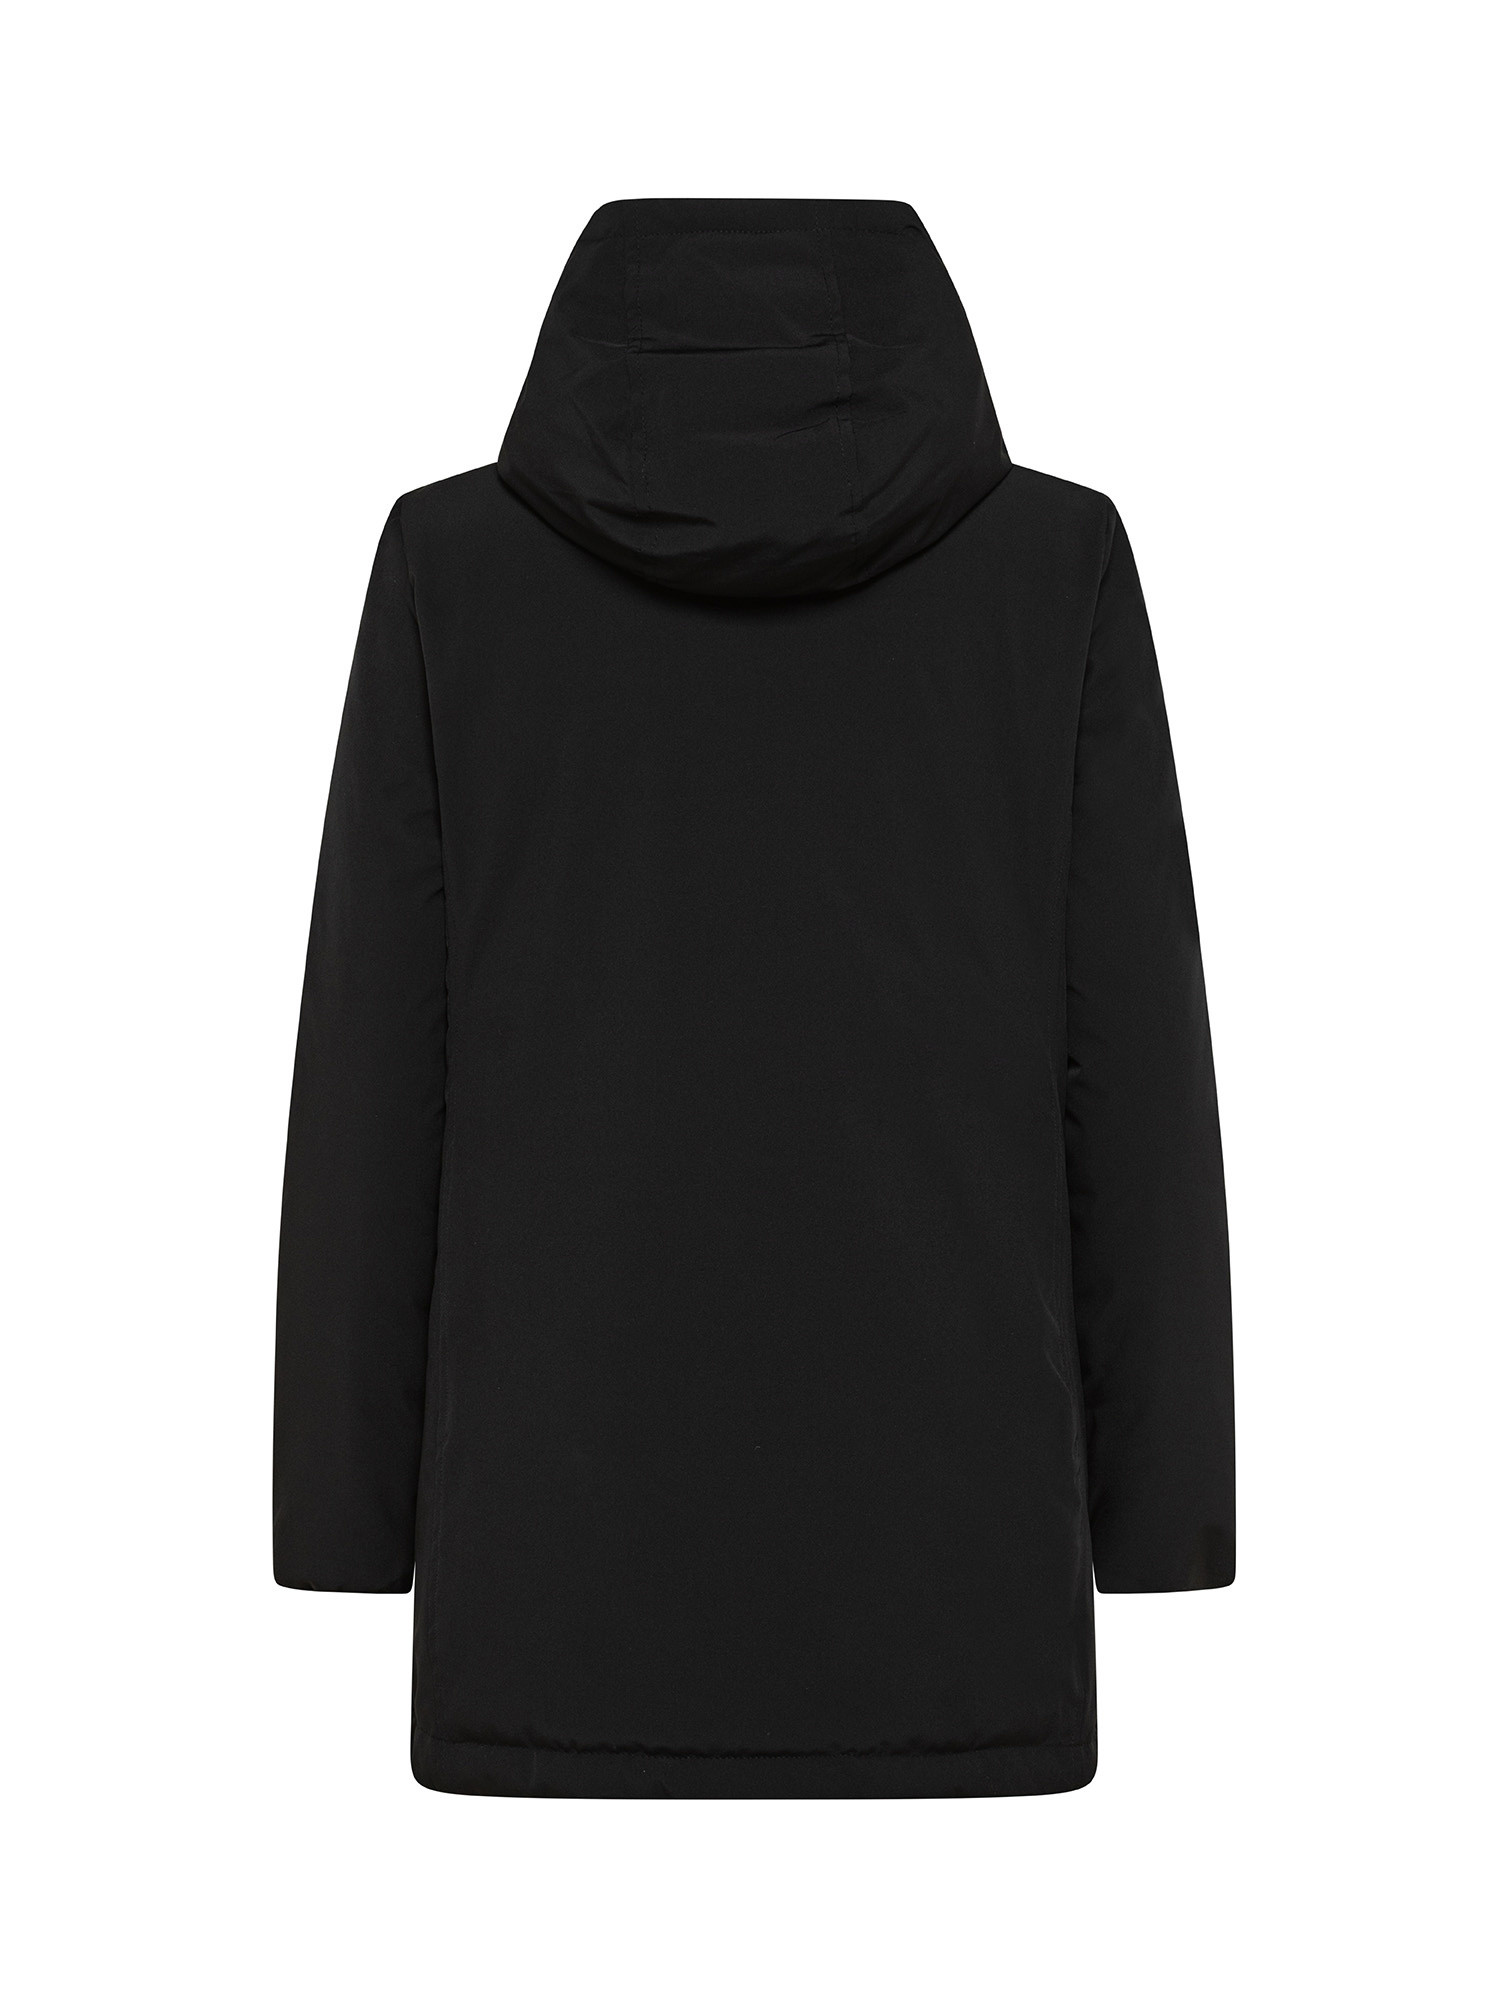 Koan - Reversible down jacket, Black, large image number 1